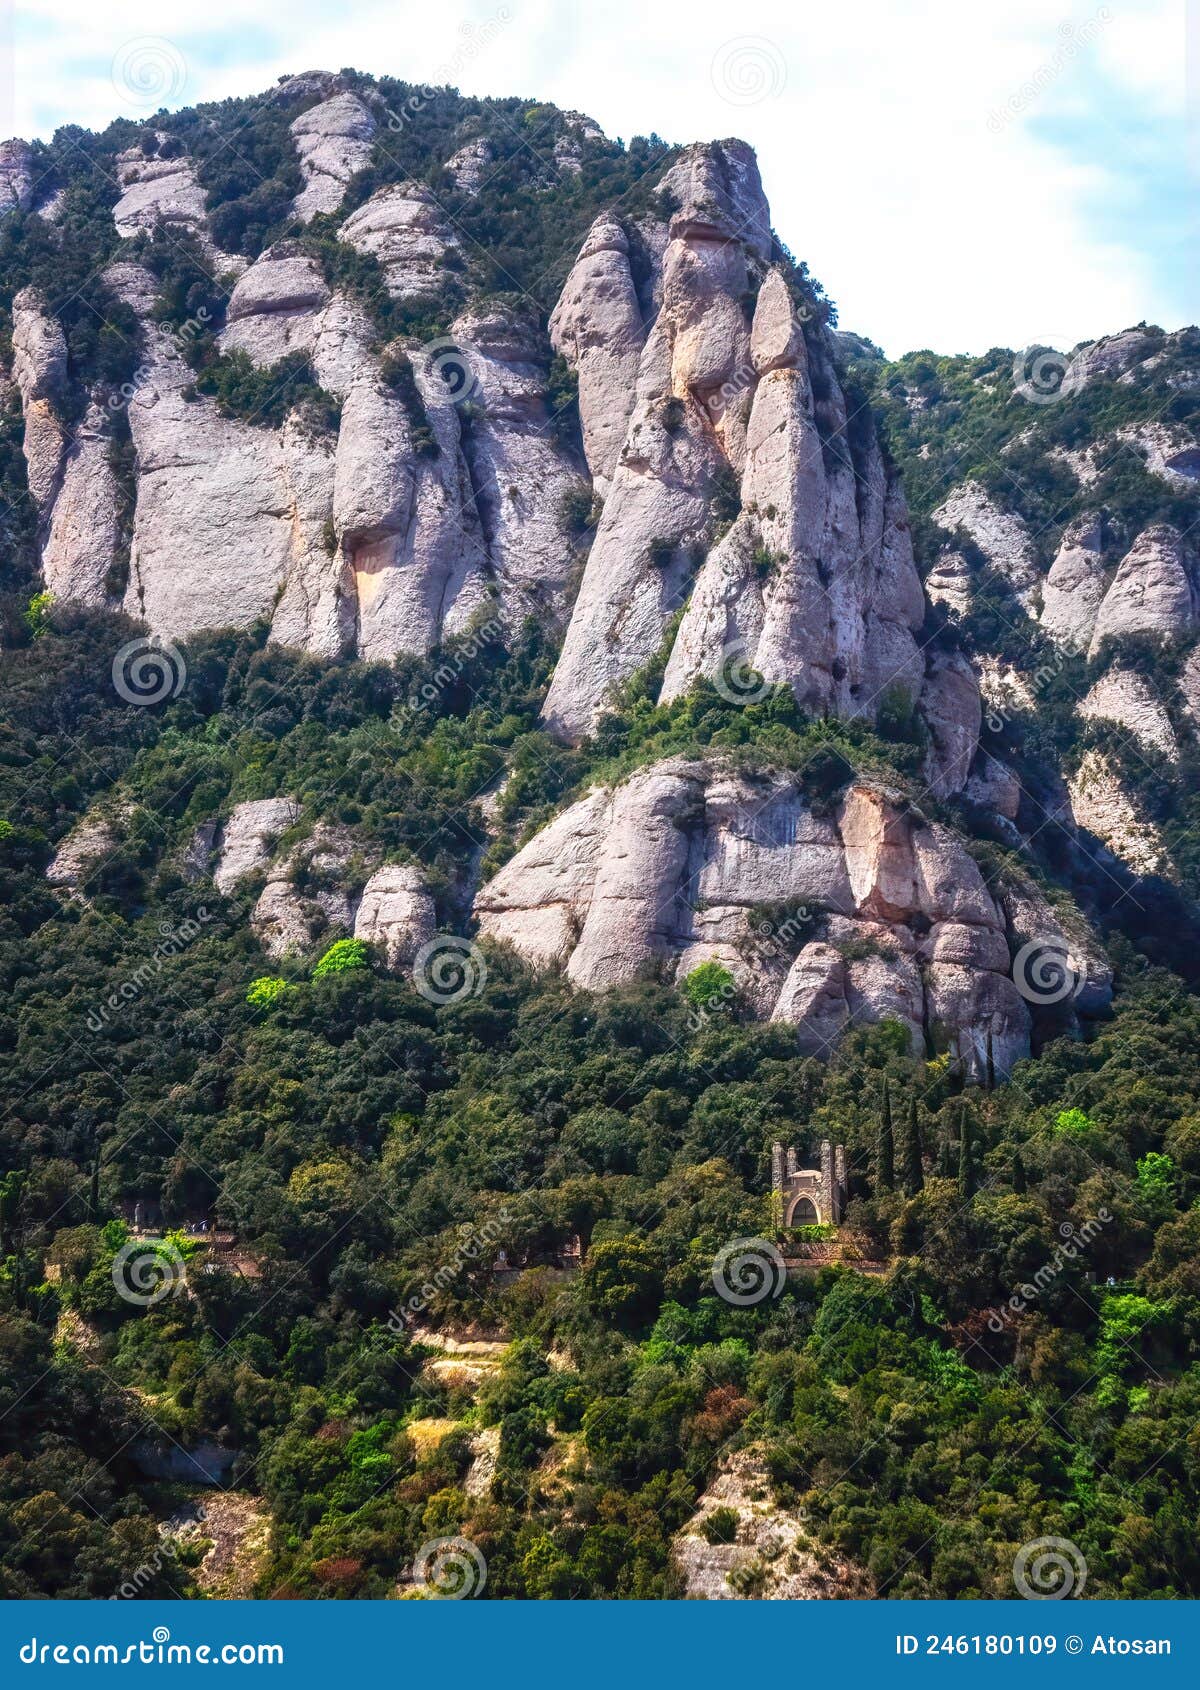 montserrat is a mountain near barcelona, in catalonia. roman ruins on the mountain